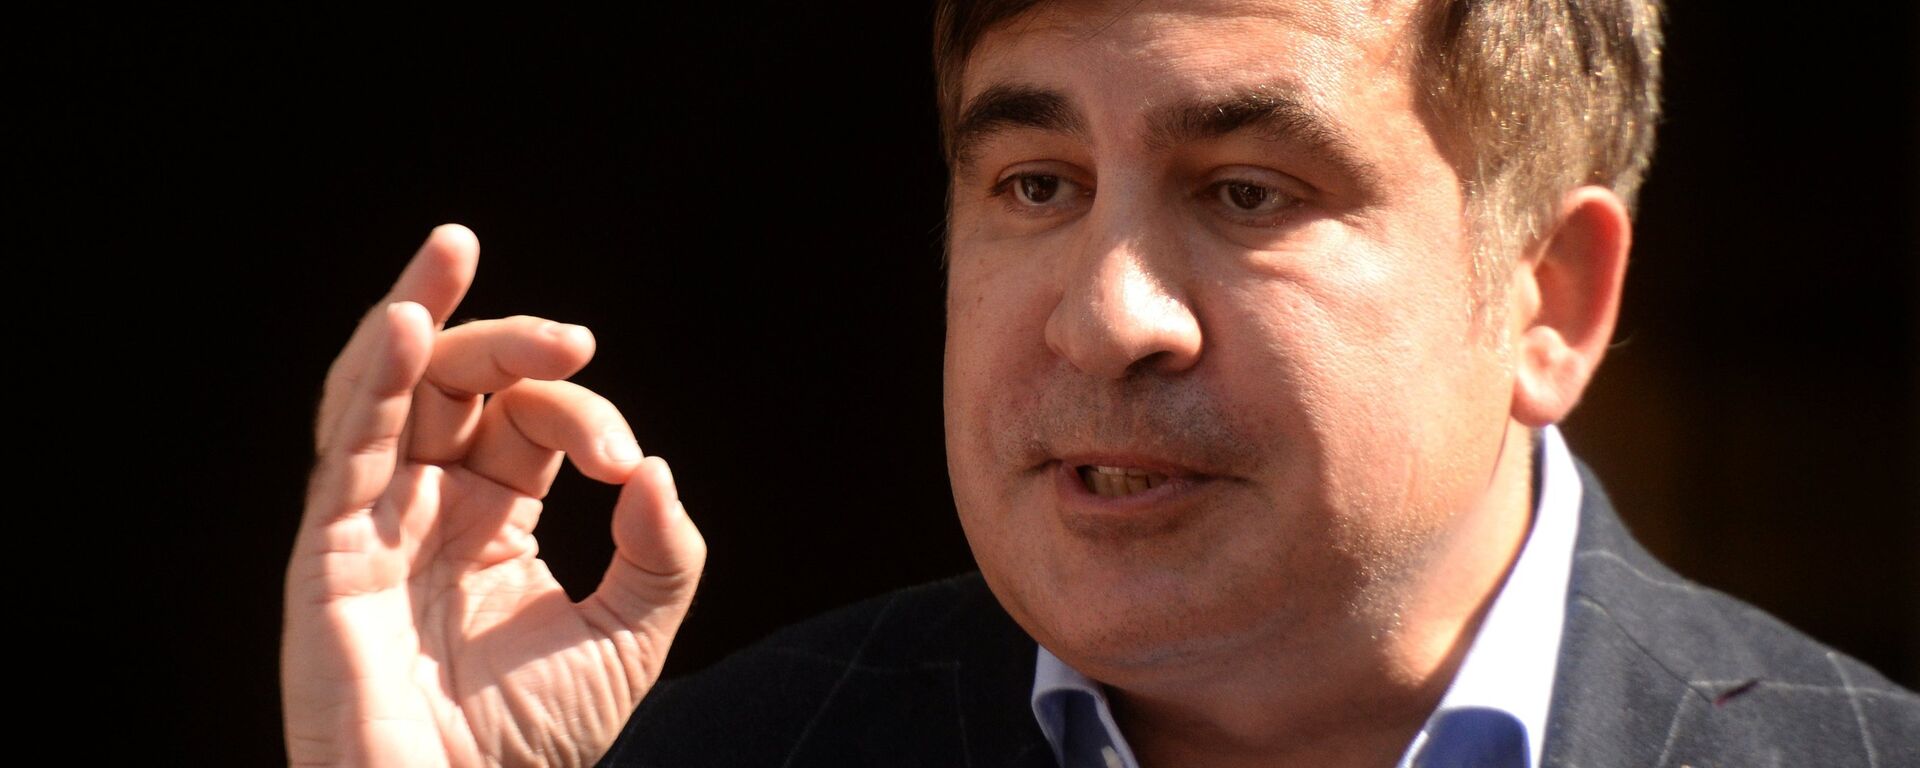 Mijaíl Saakashvili, expresidente de Georgia - Sputnik Mundo, 1920, 04.10.2021